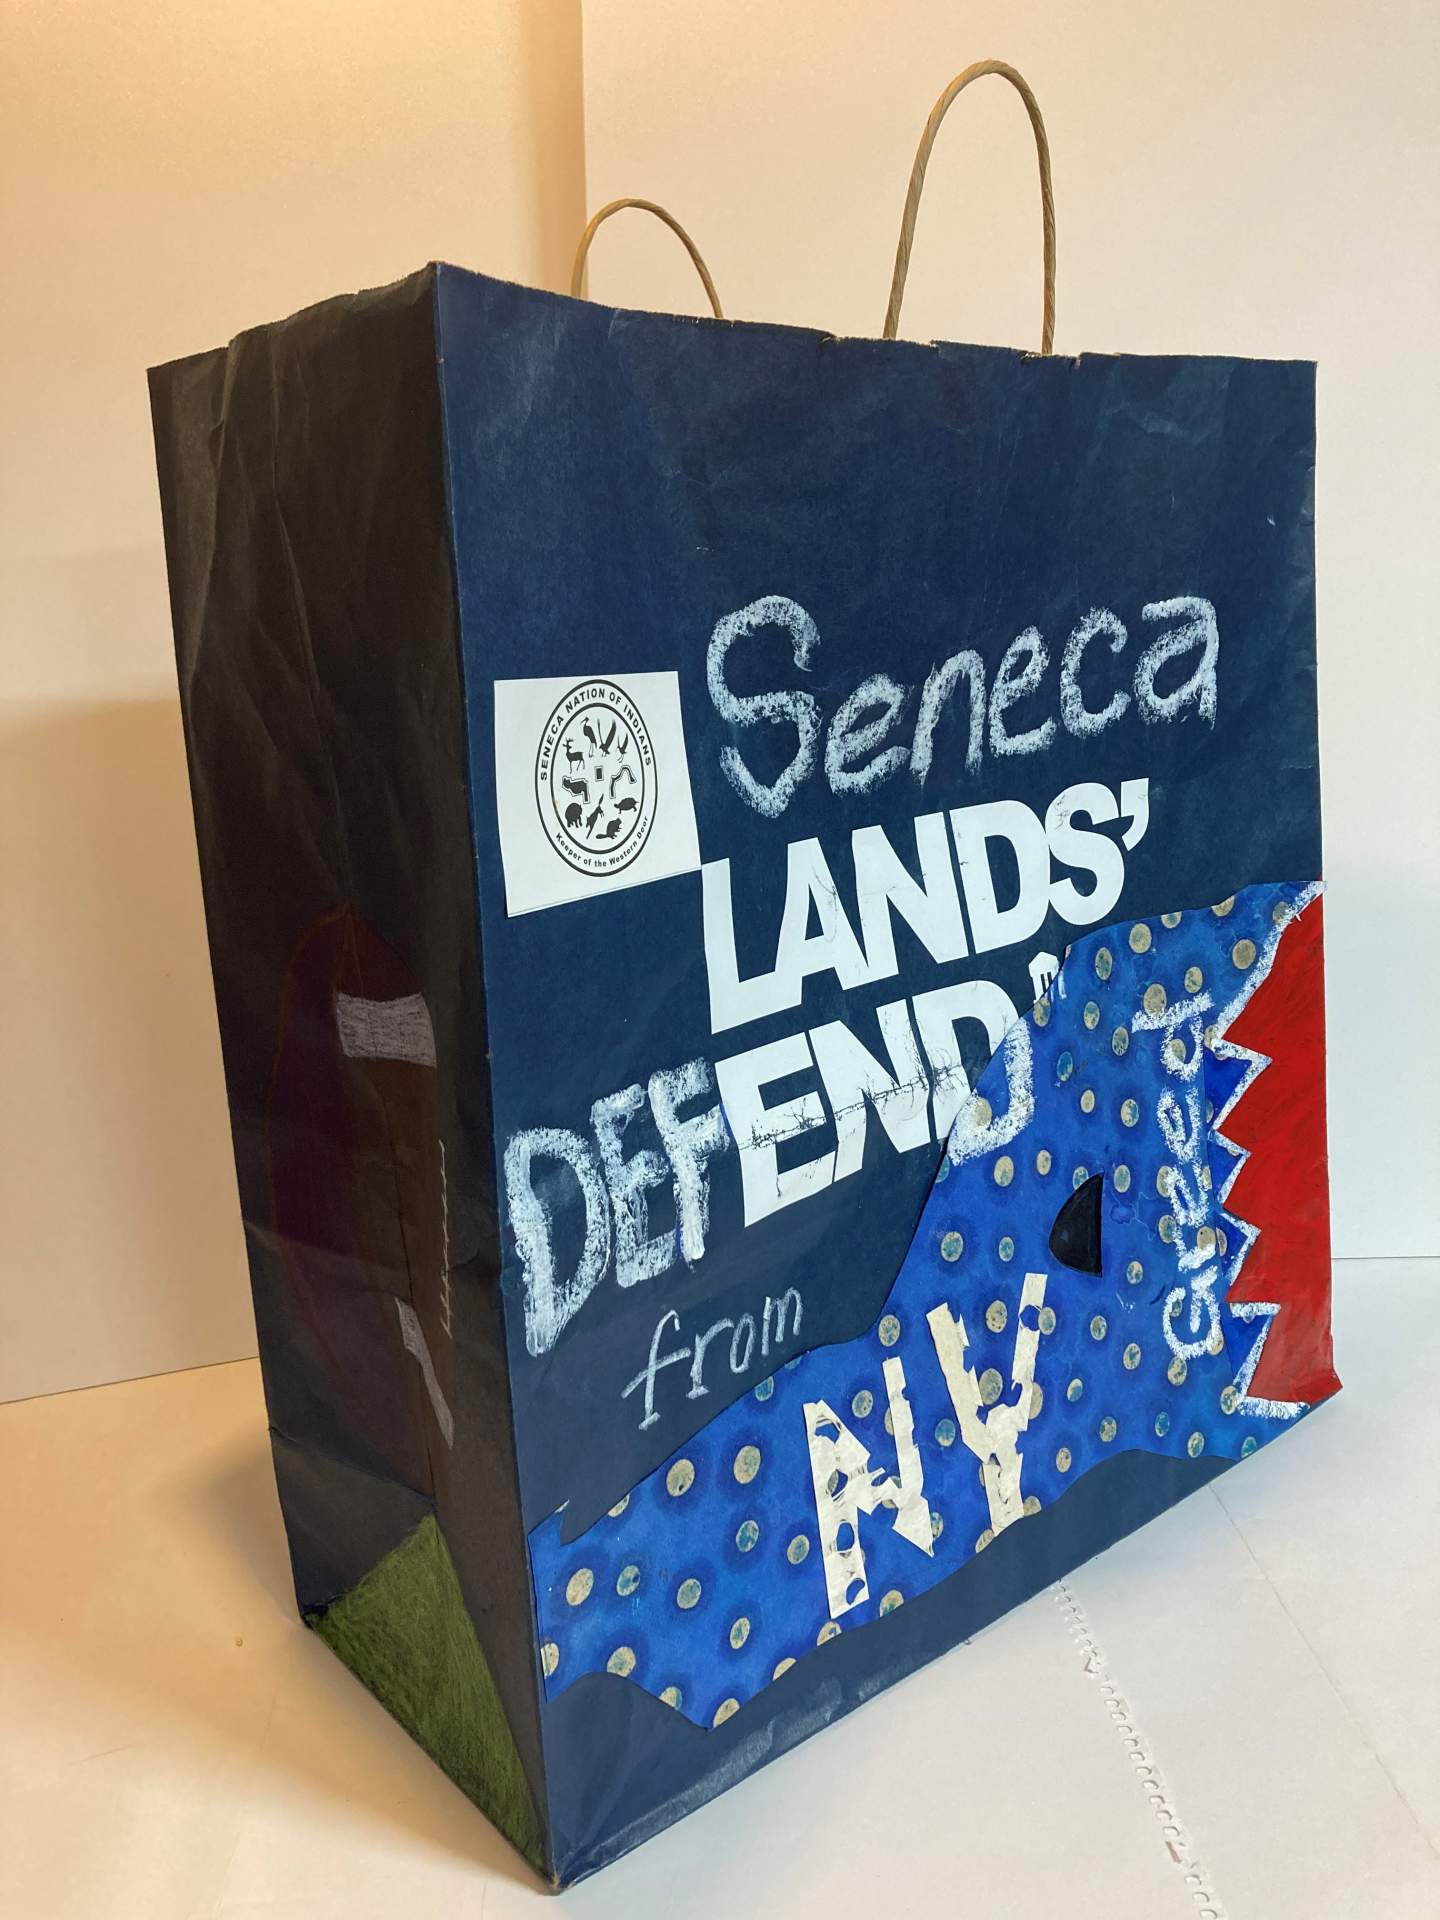 Defend Seneca Lands’ from NY Greed